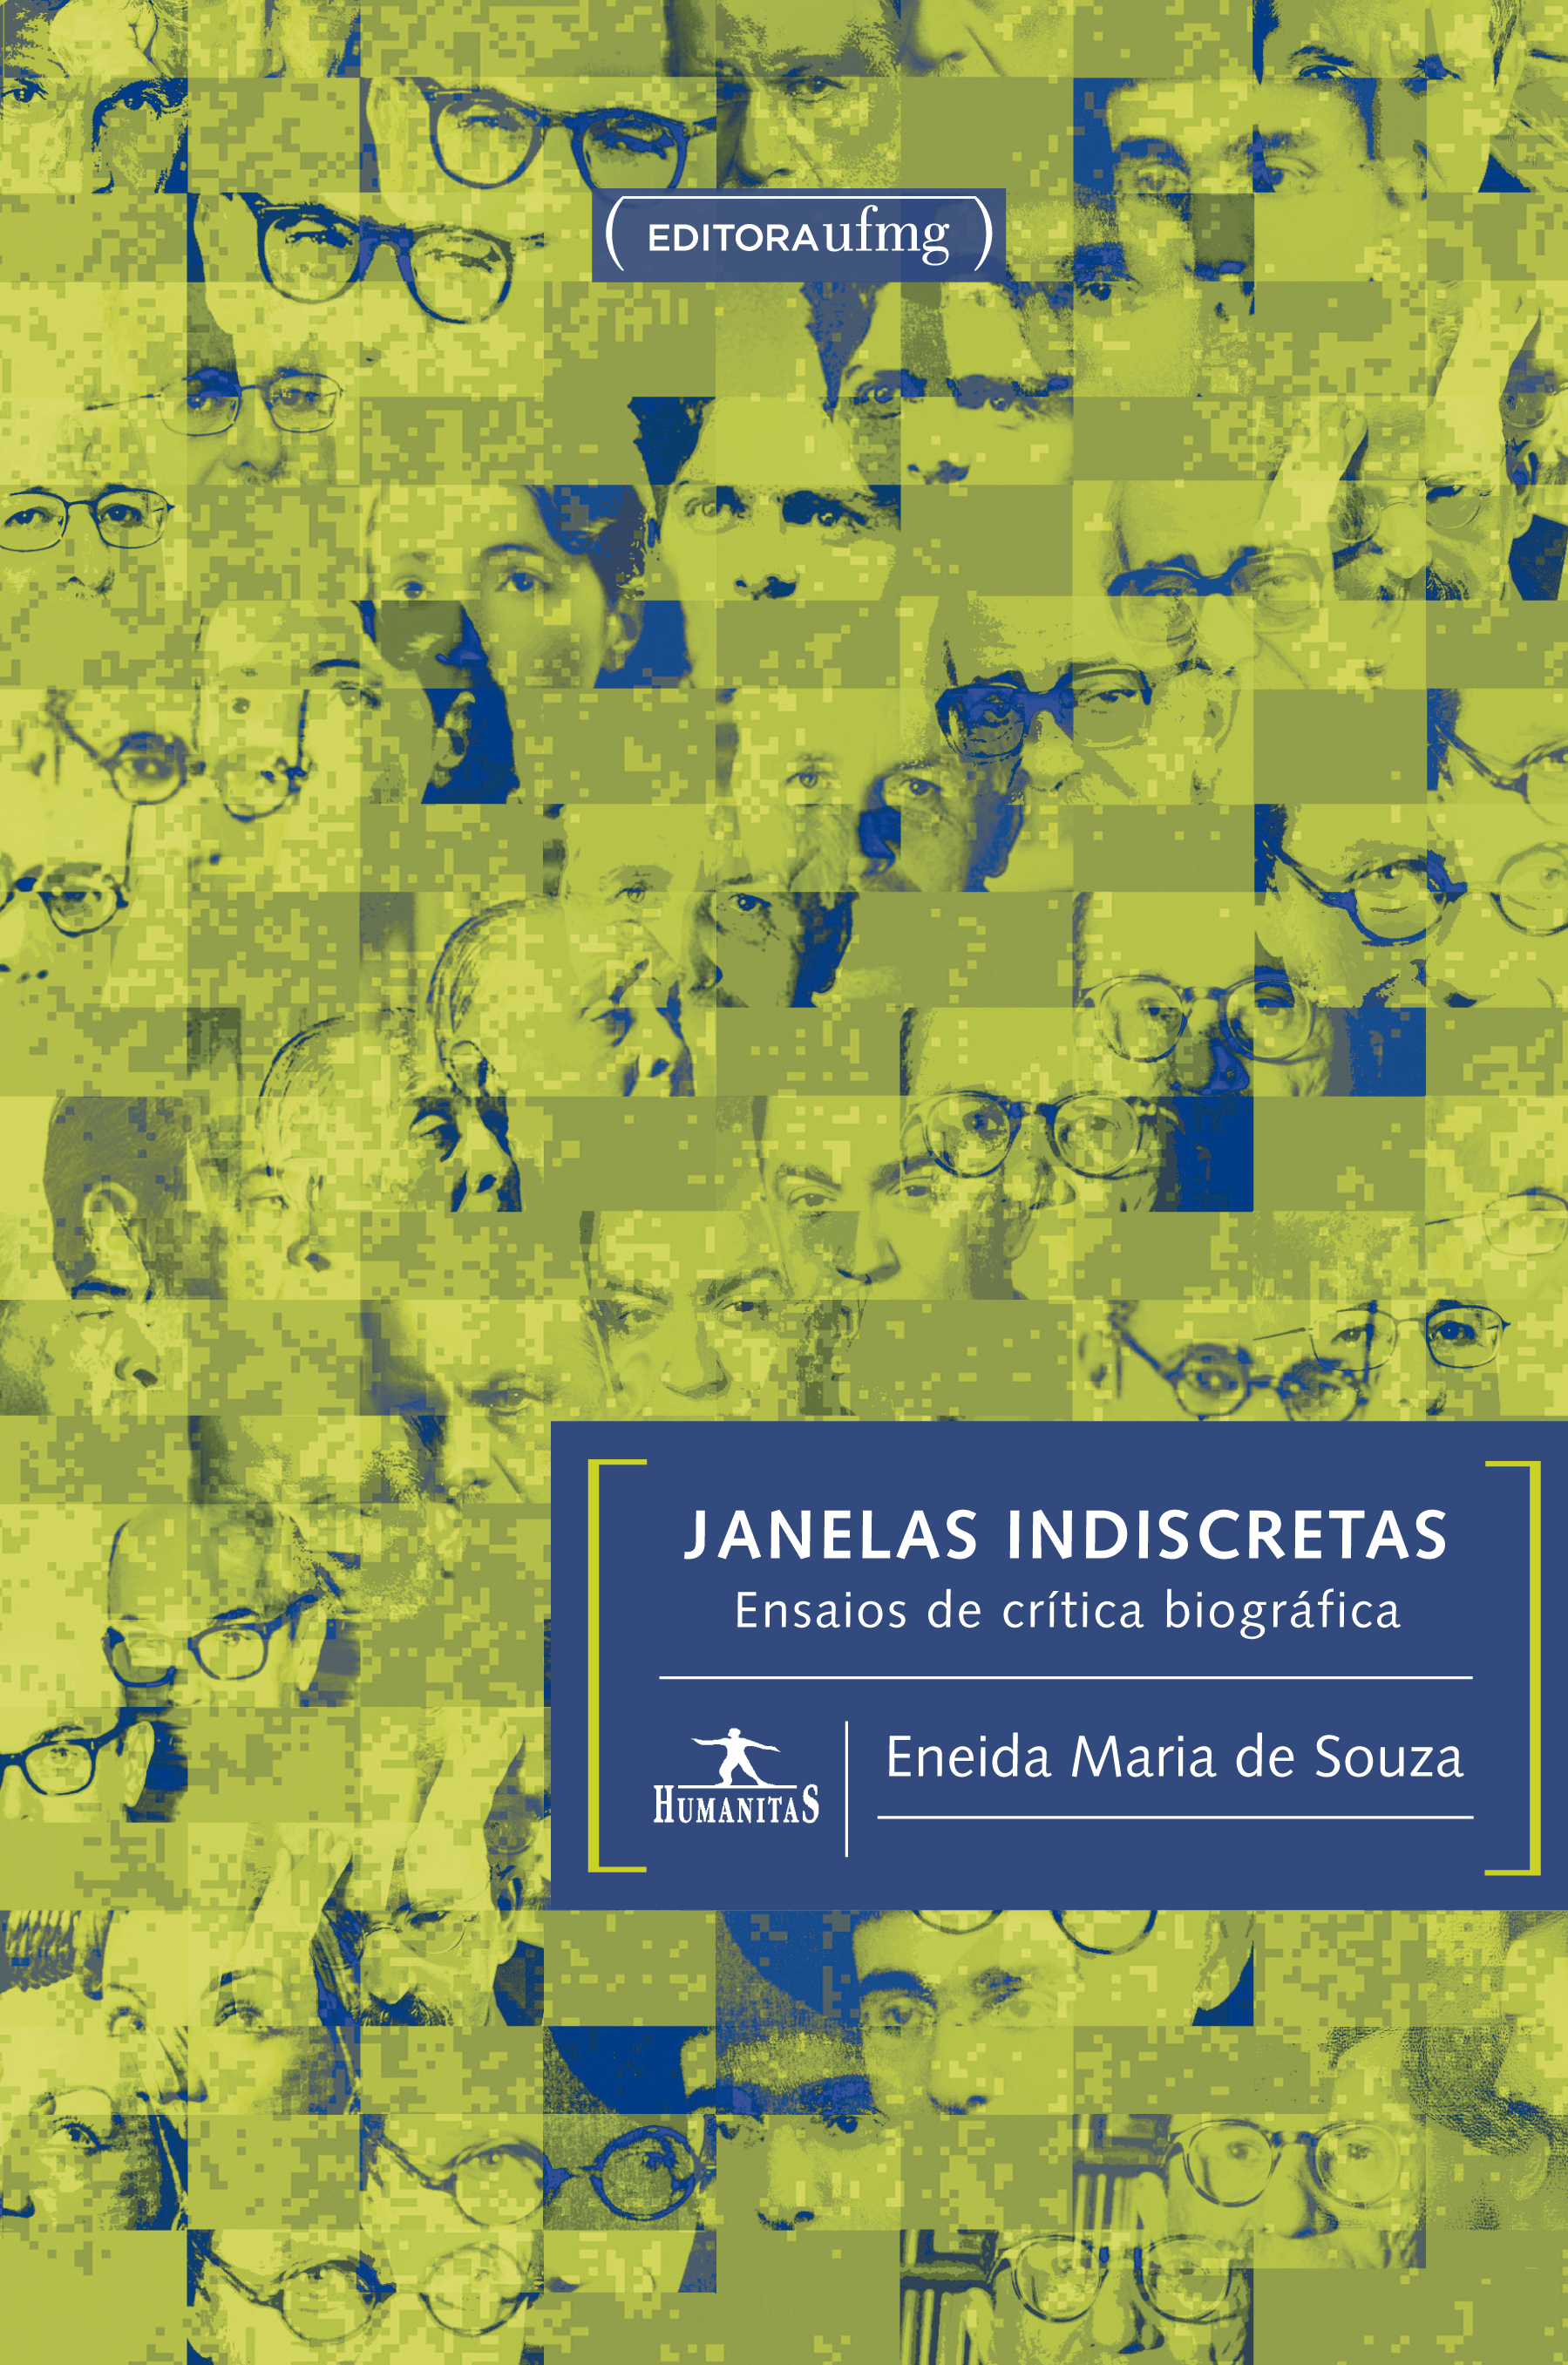 JANELAS_INDISCRETAS_CAPA.jpg